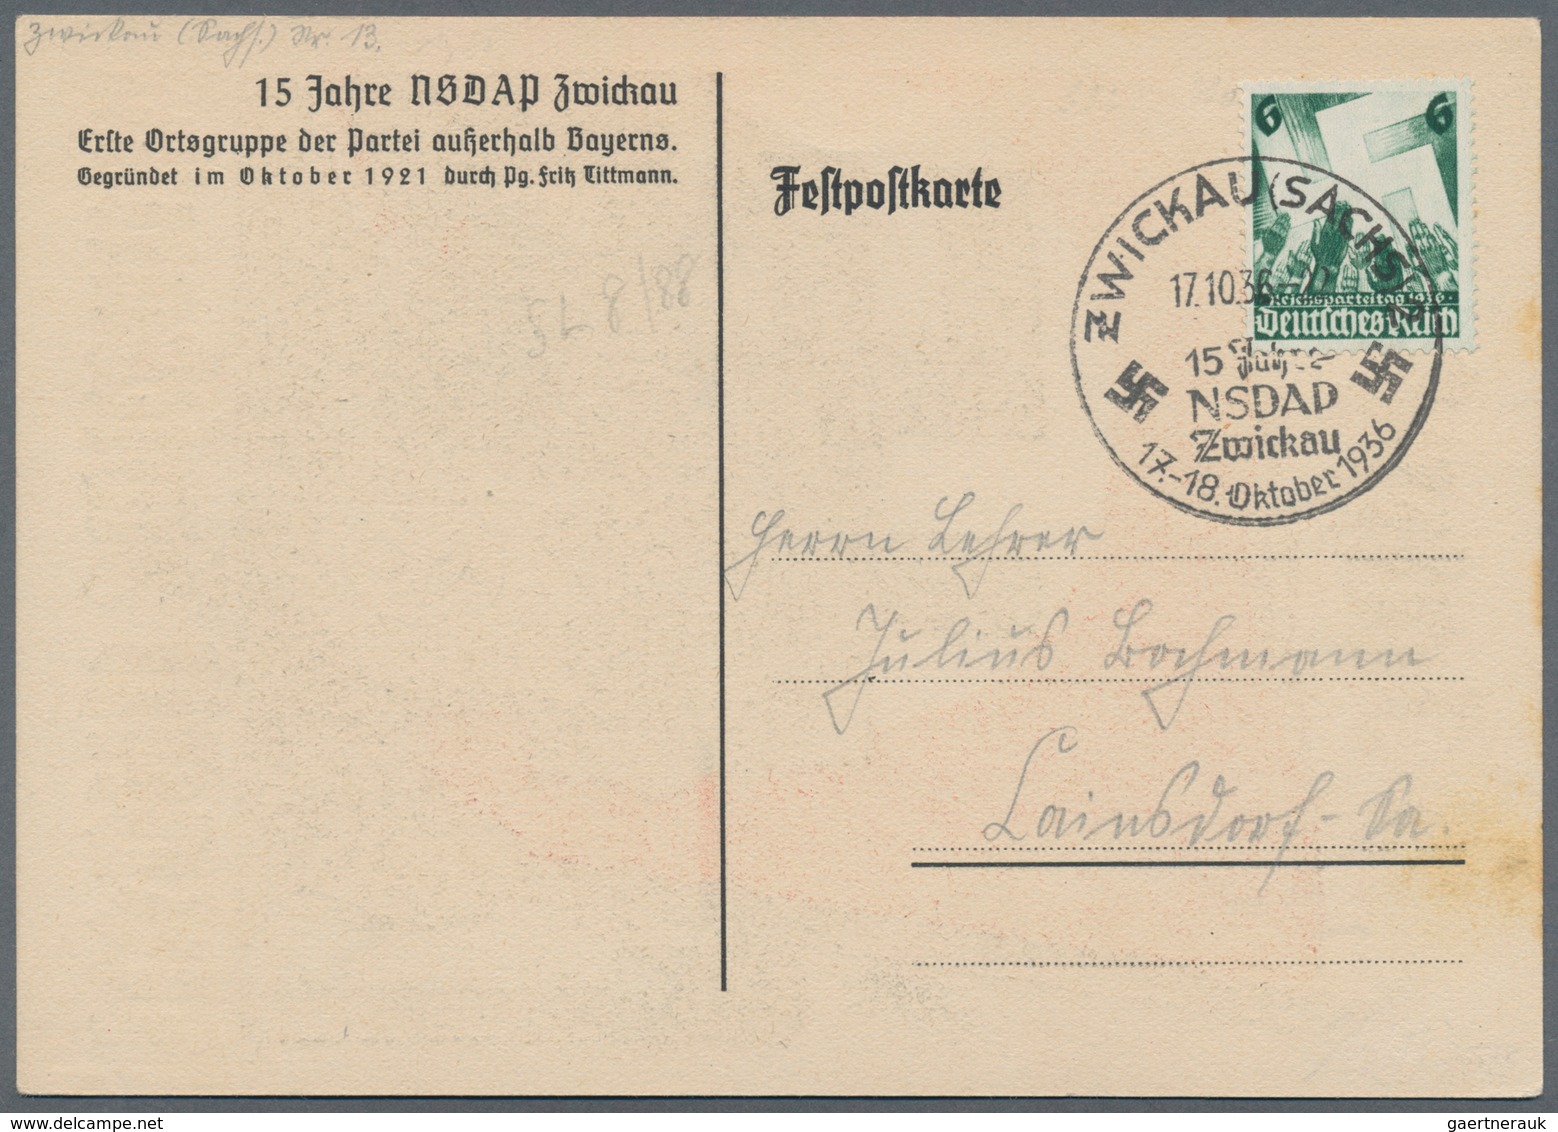 Ansichtskarten: Propaganda: 1936. Scarce 15th Anniversary Zwickau Nazi Party SA Celebration For Zwic - Political Parties & Elections